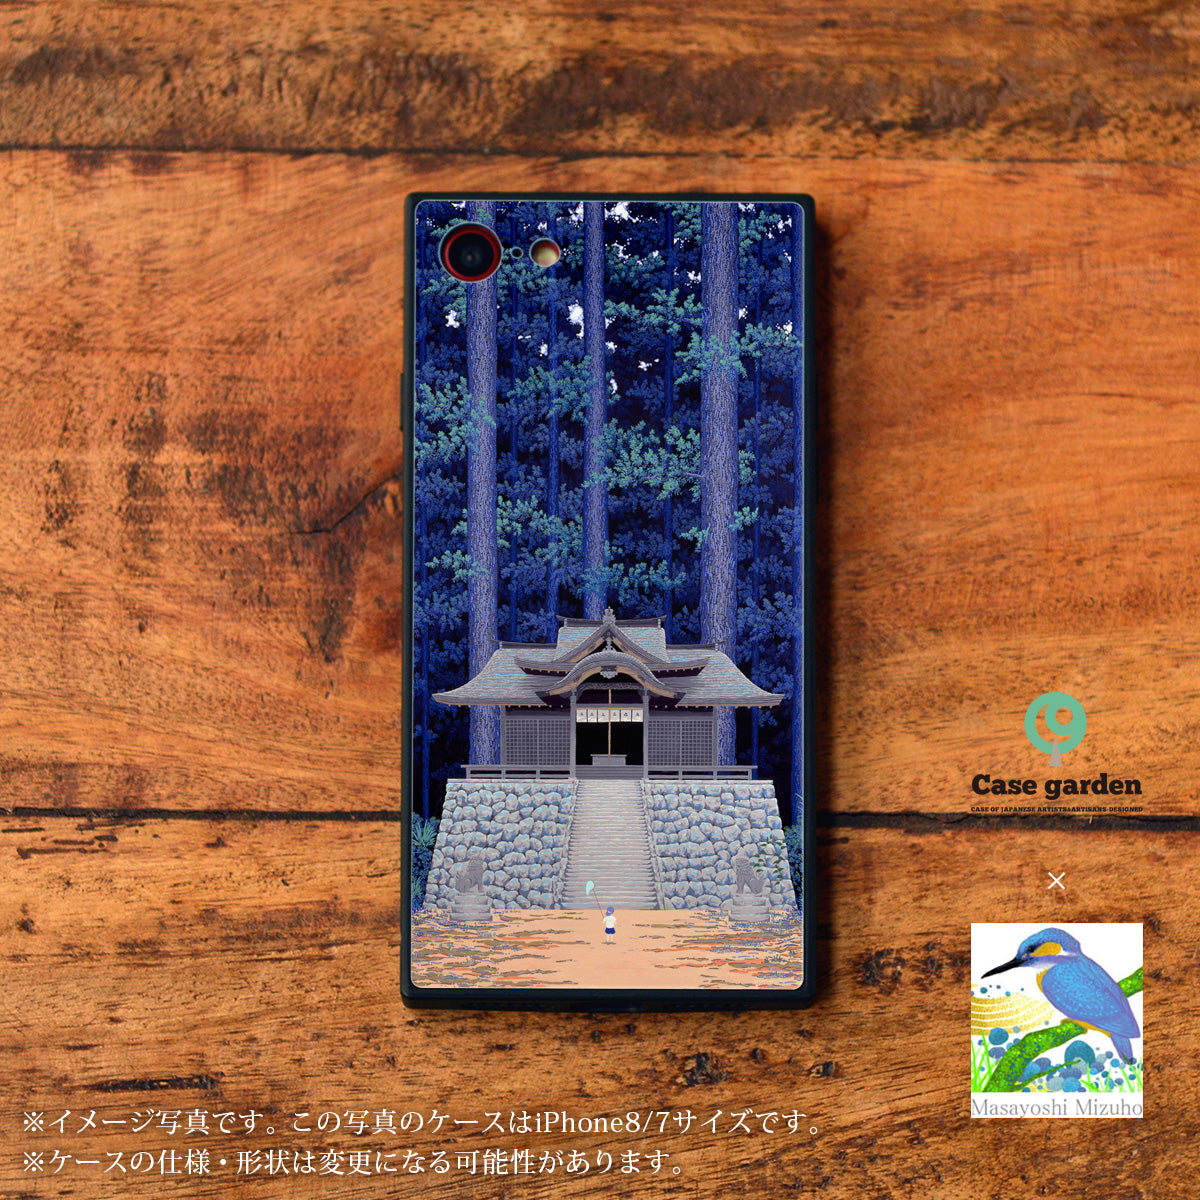 Masayoshi Mizuhoデザインの、キラキラと輝く背面カバーのガラスが美しいスクエア型強化ガラススマホケース「鎮守の森」です。写真の機種はiPhoneXRです。